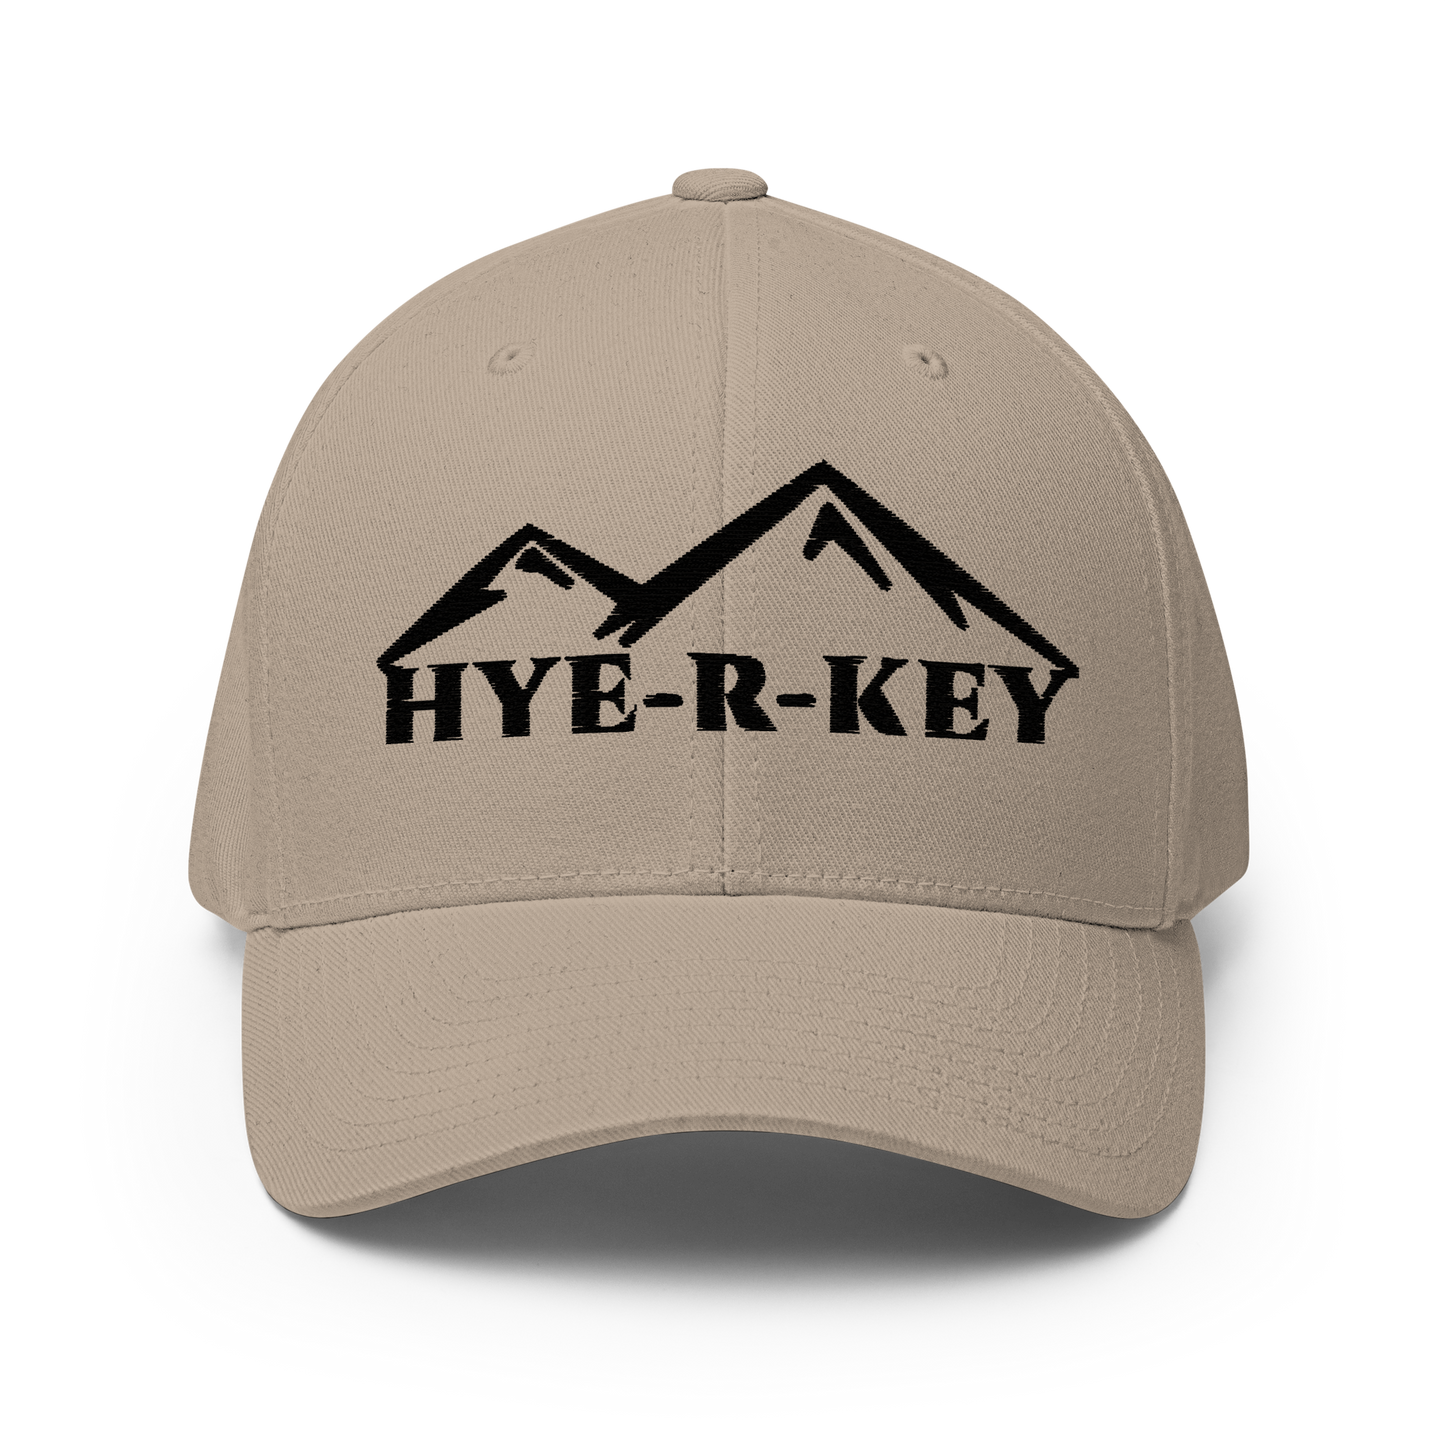 2-Hye: Hye-R-Key Cap